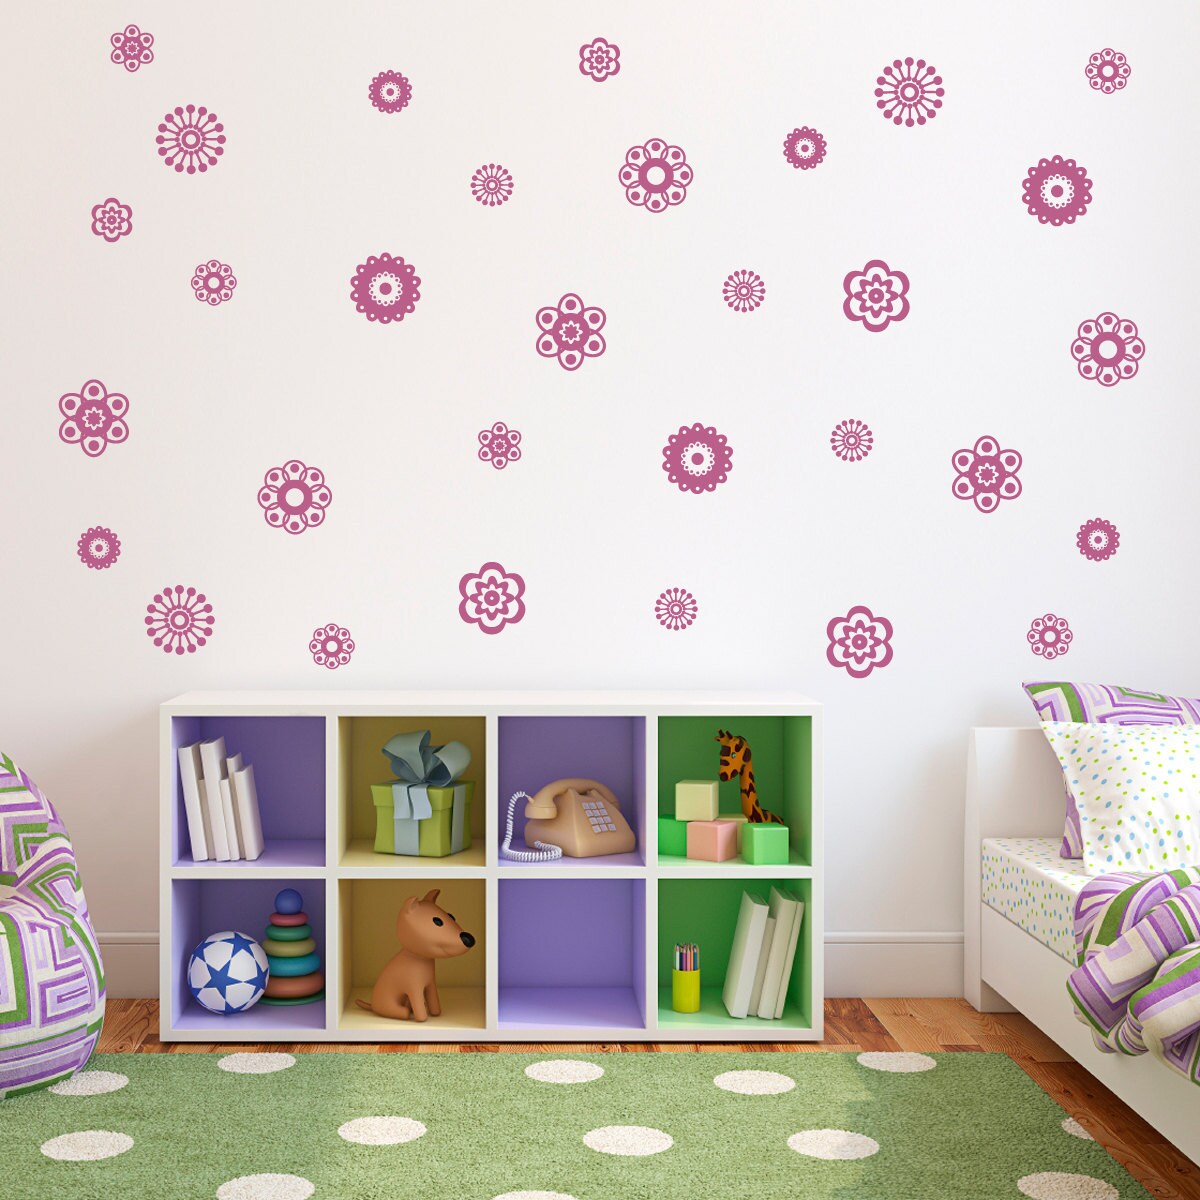 Flower Wall Decals - Girls Bedroom Wall Decals - Set of 31 decals